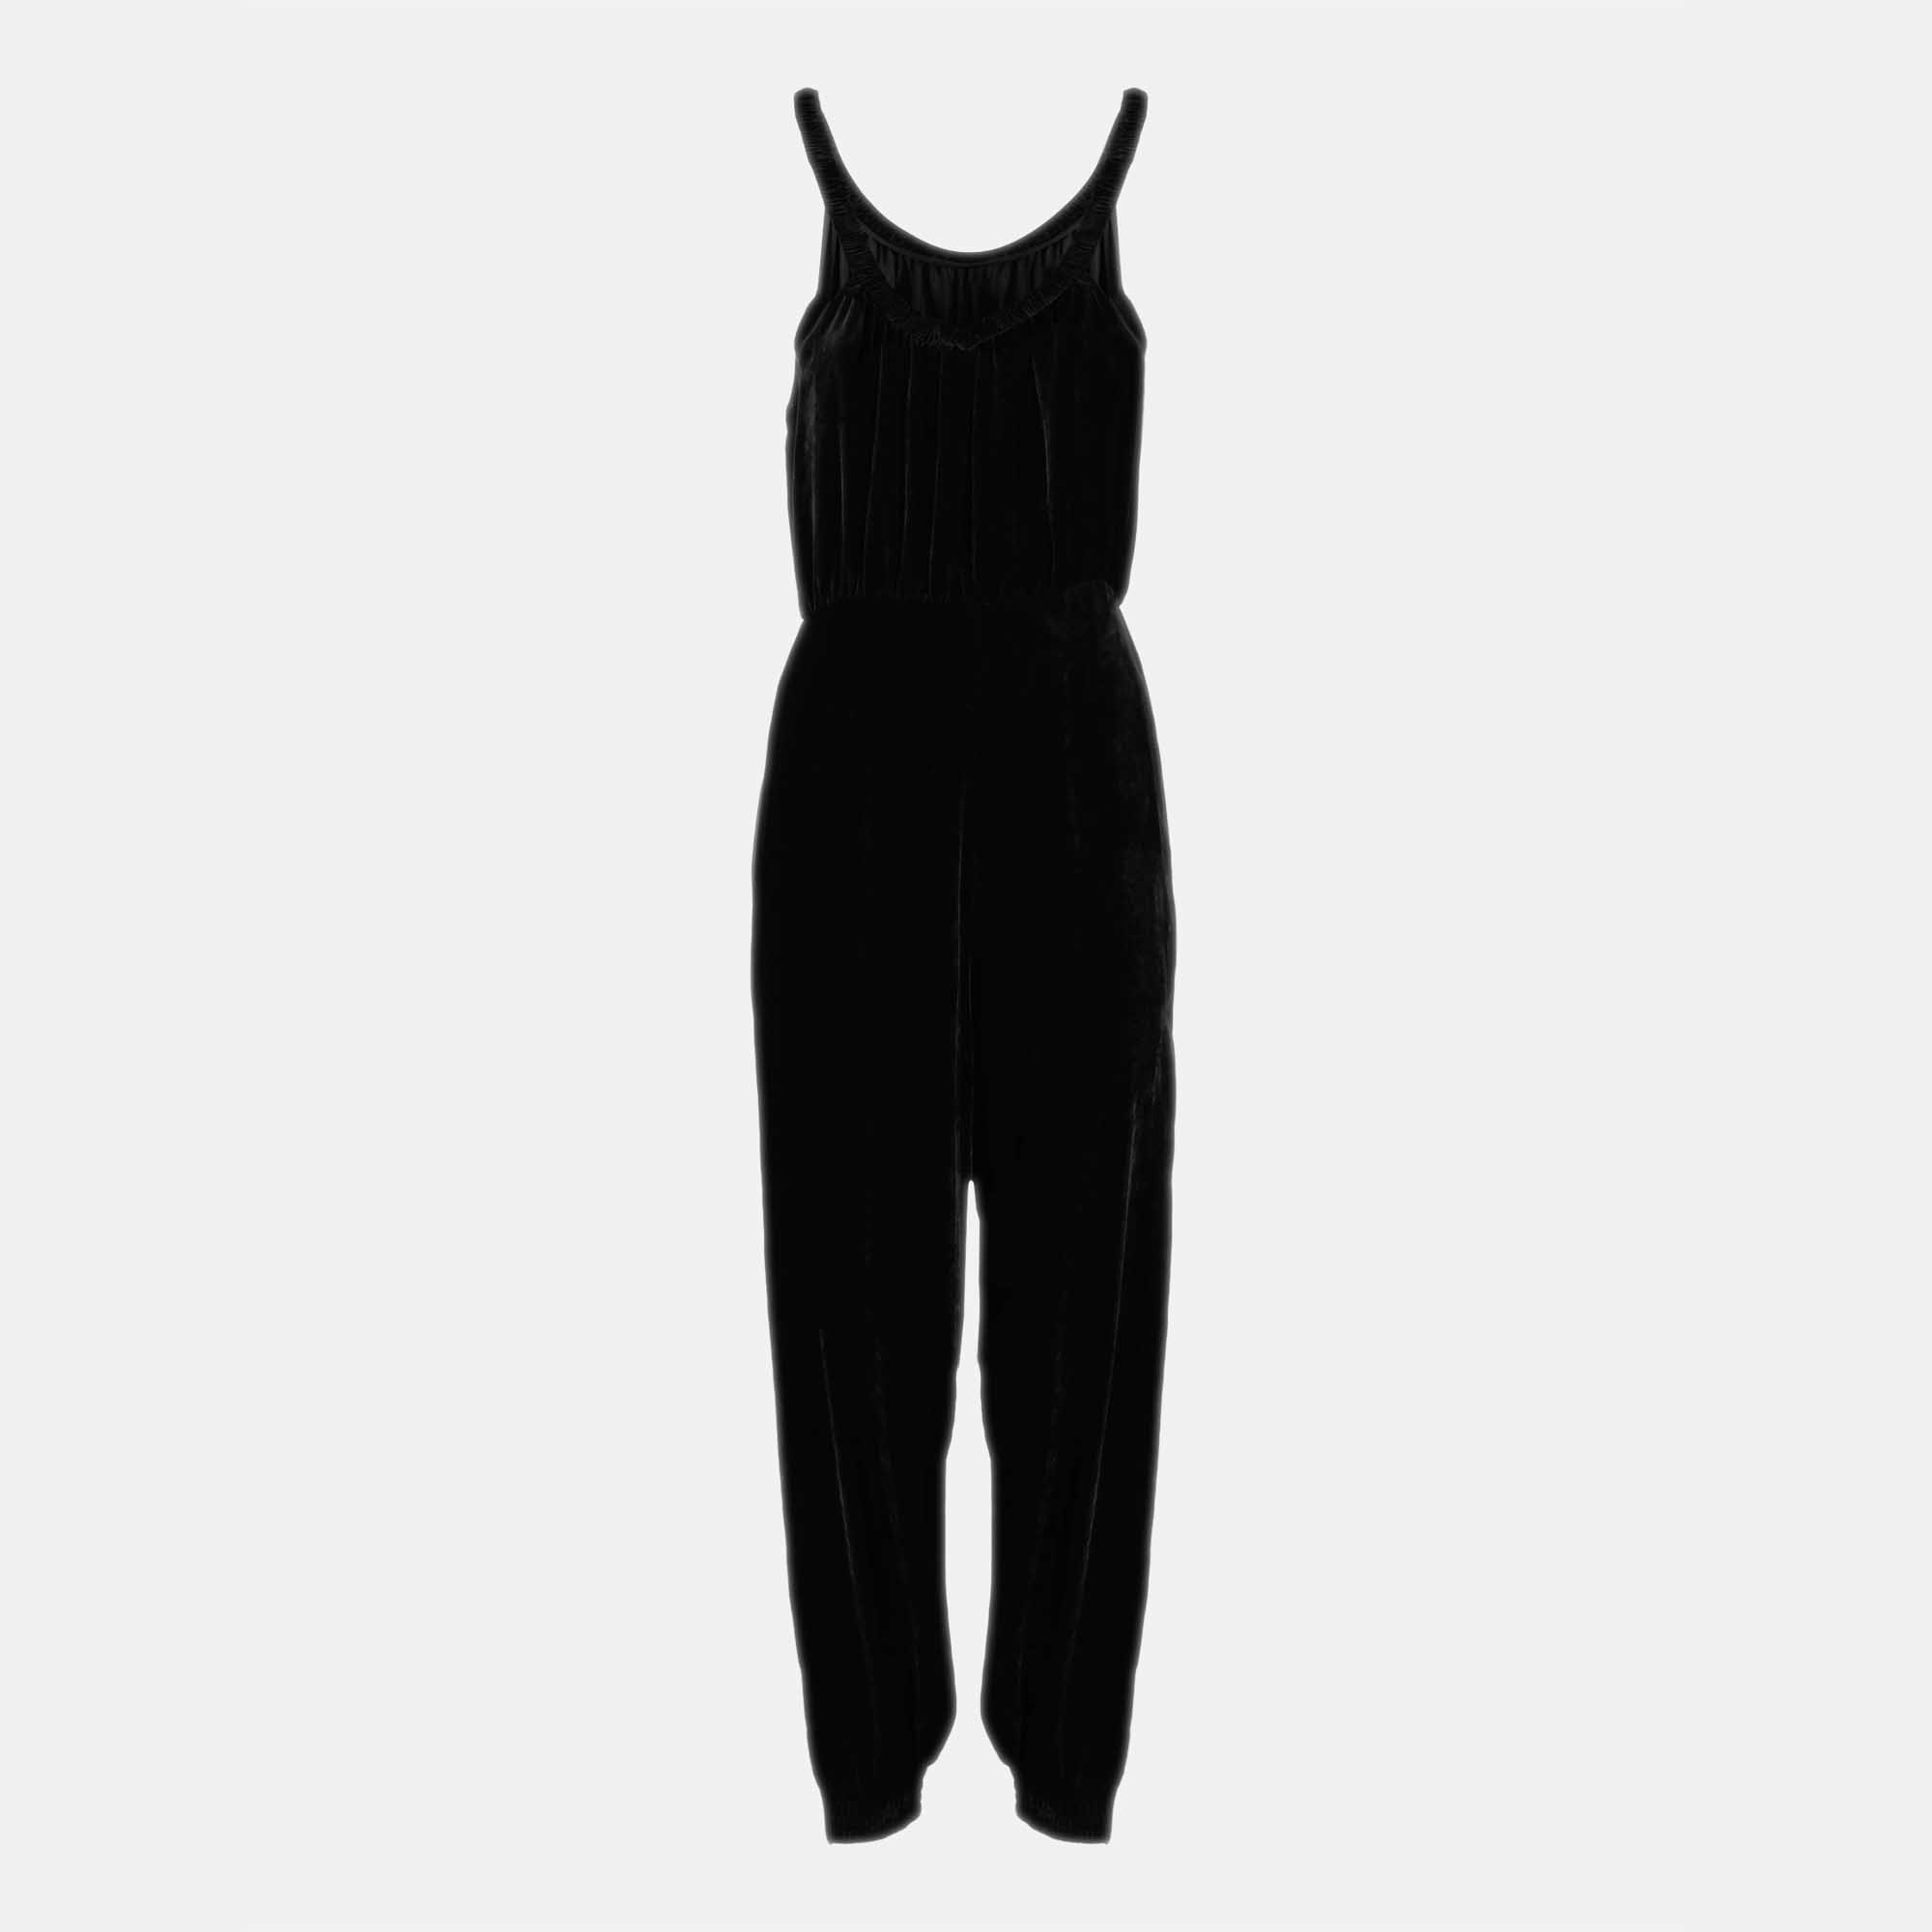 Fendi Women's Synthetic Fibers Jumpsuit - Black - S